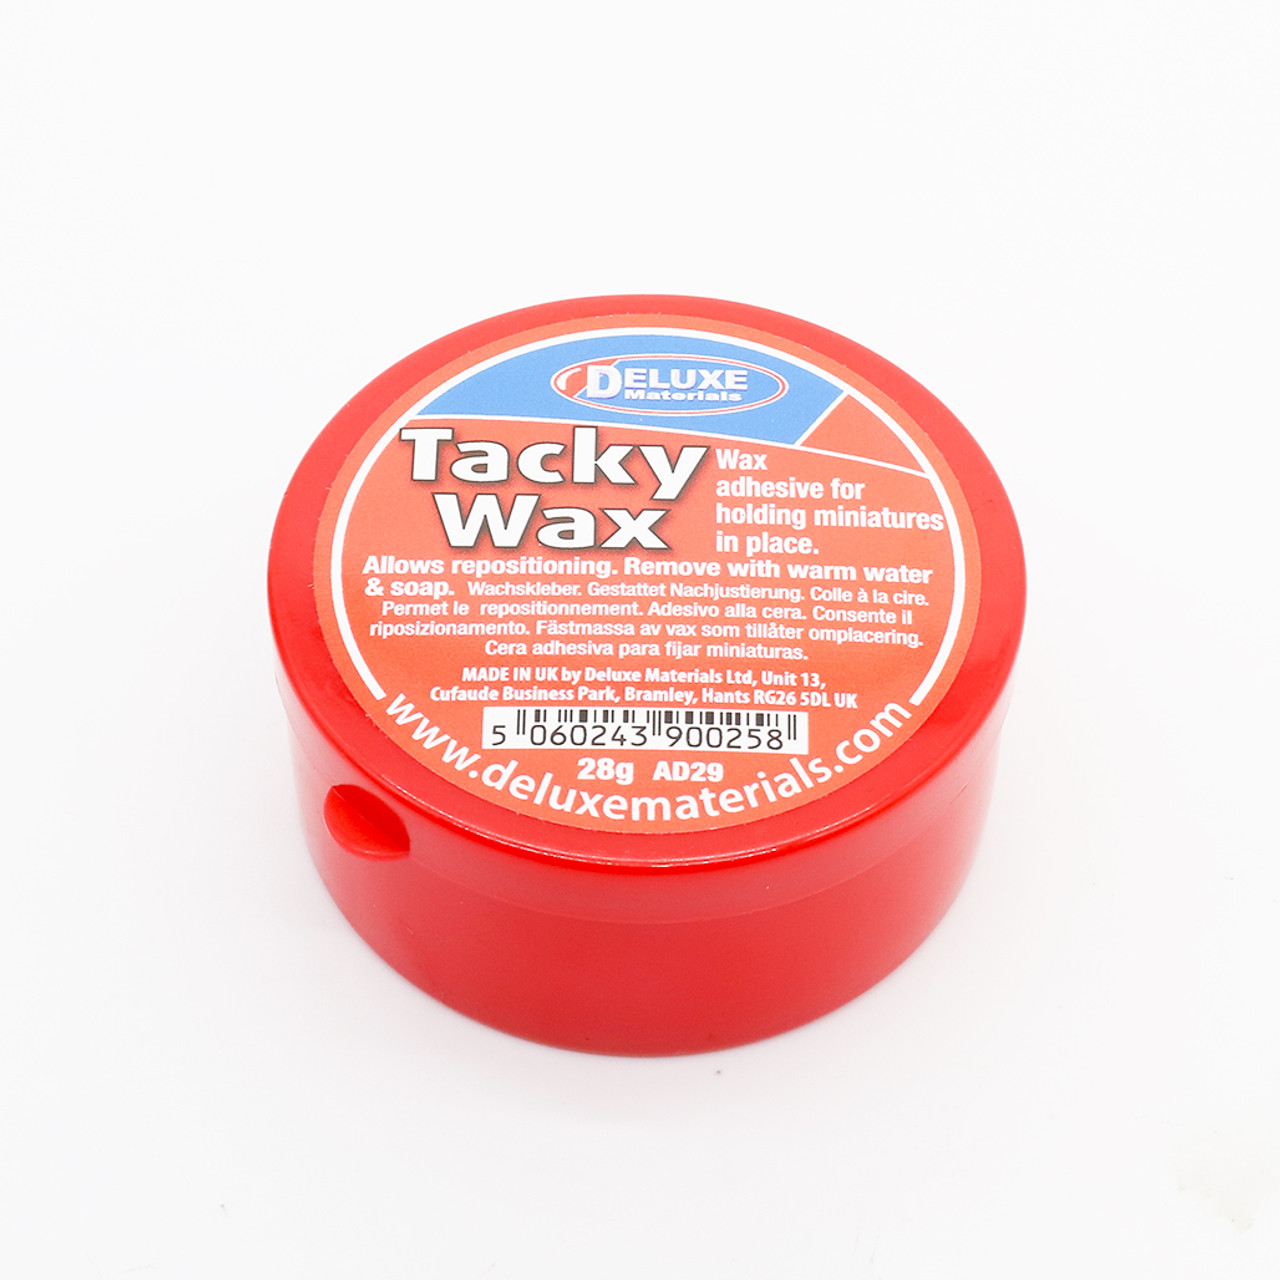 Tacky wax 28g - Deluxe materials AD-29